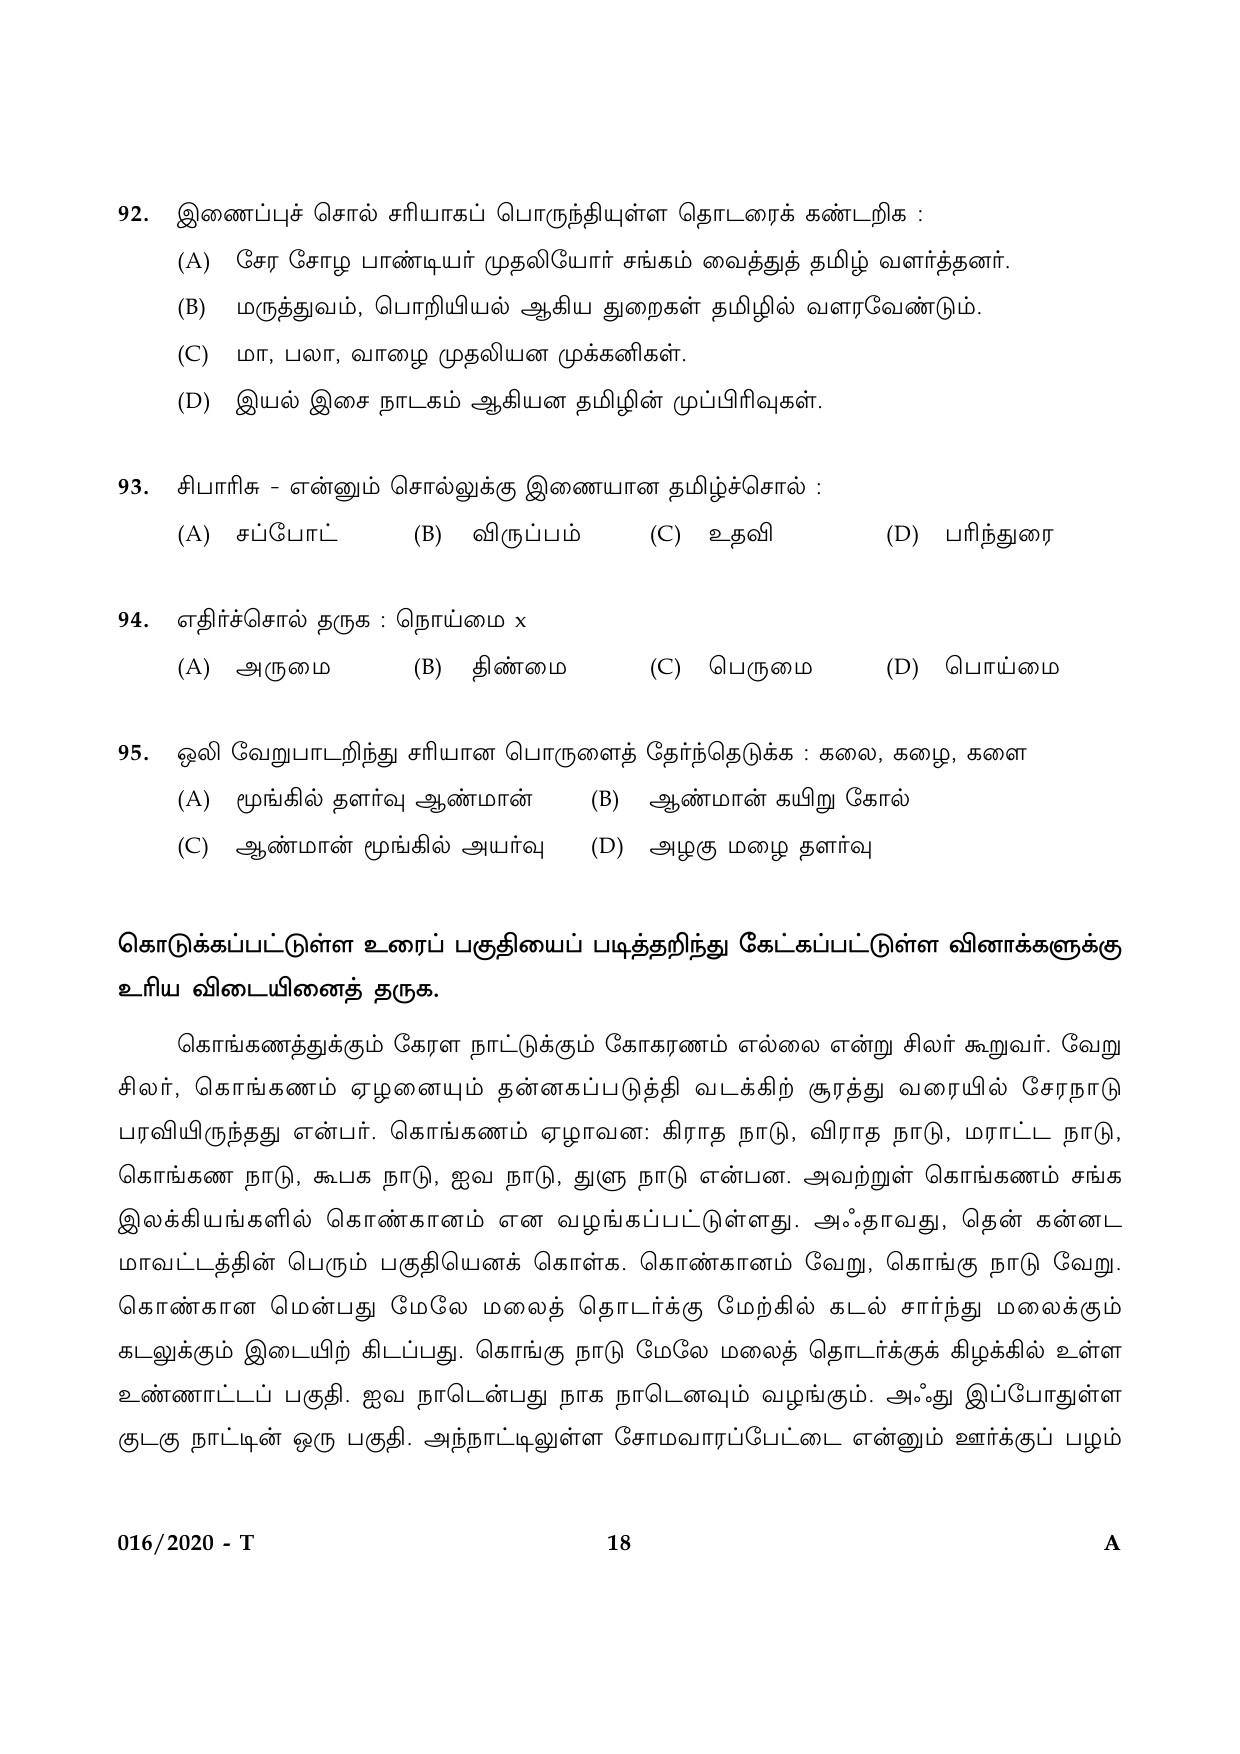 KAS Officer Trainee Tamil Exam 2020 Code 0162020 17